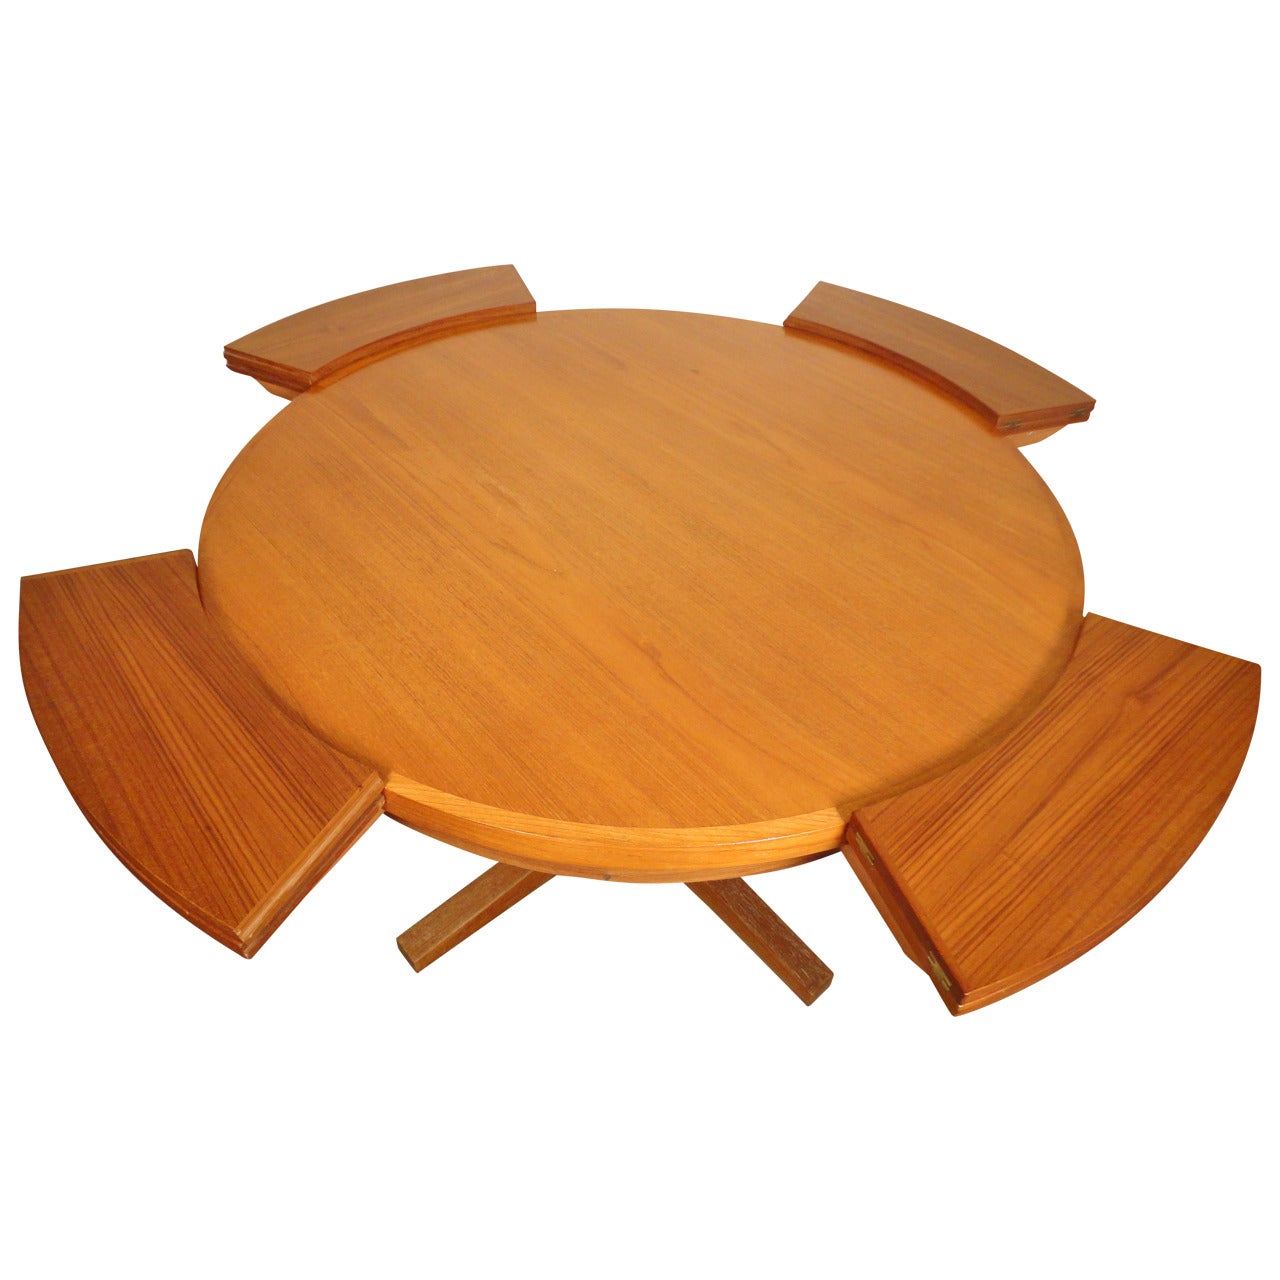 Midcentury Circular "Flip-Flap" Dining Table by Dyrlund